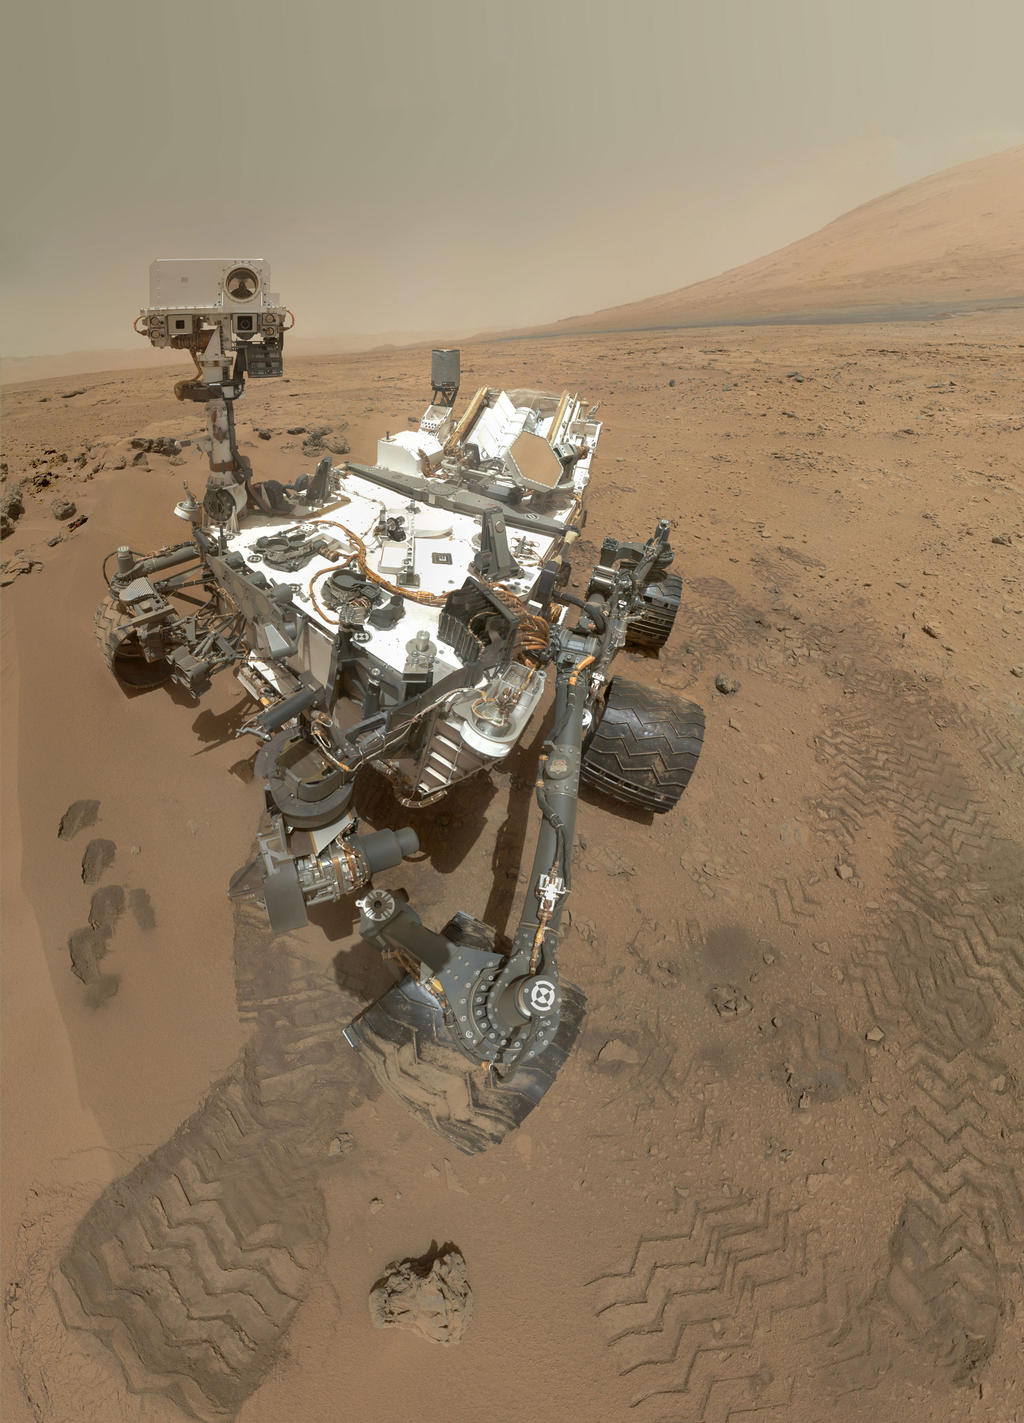 Self portrait of Mars Curiosity